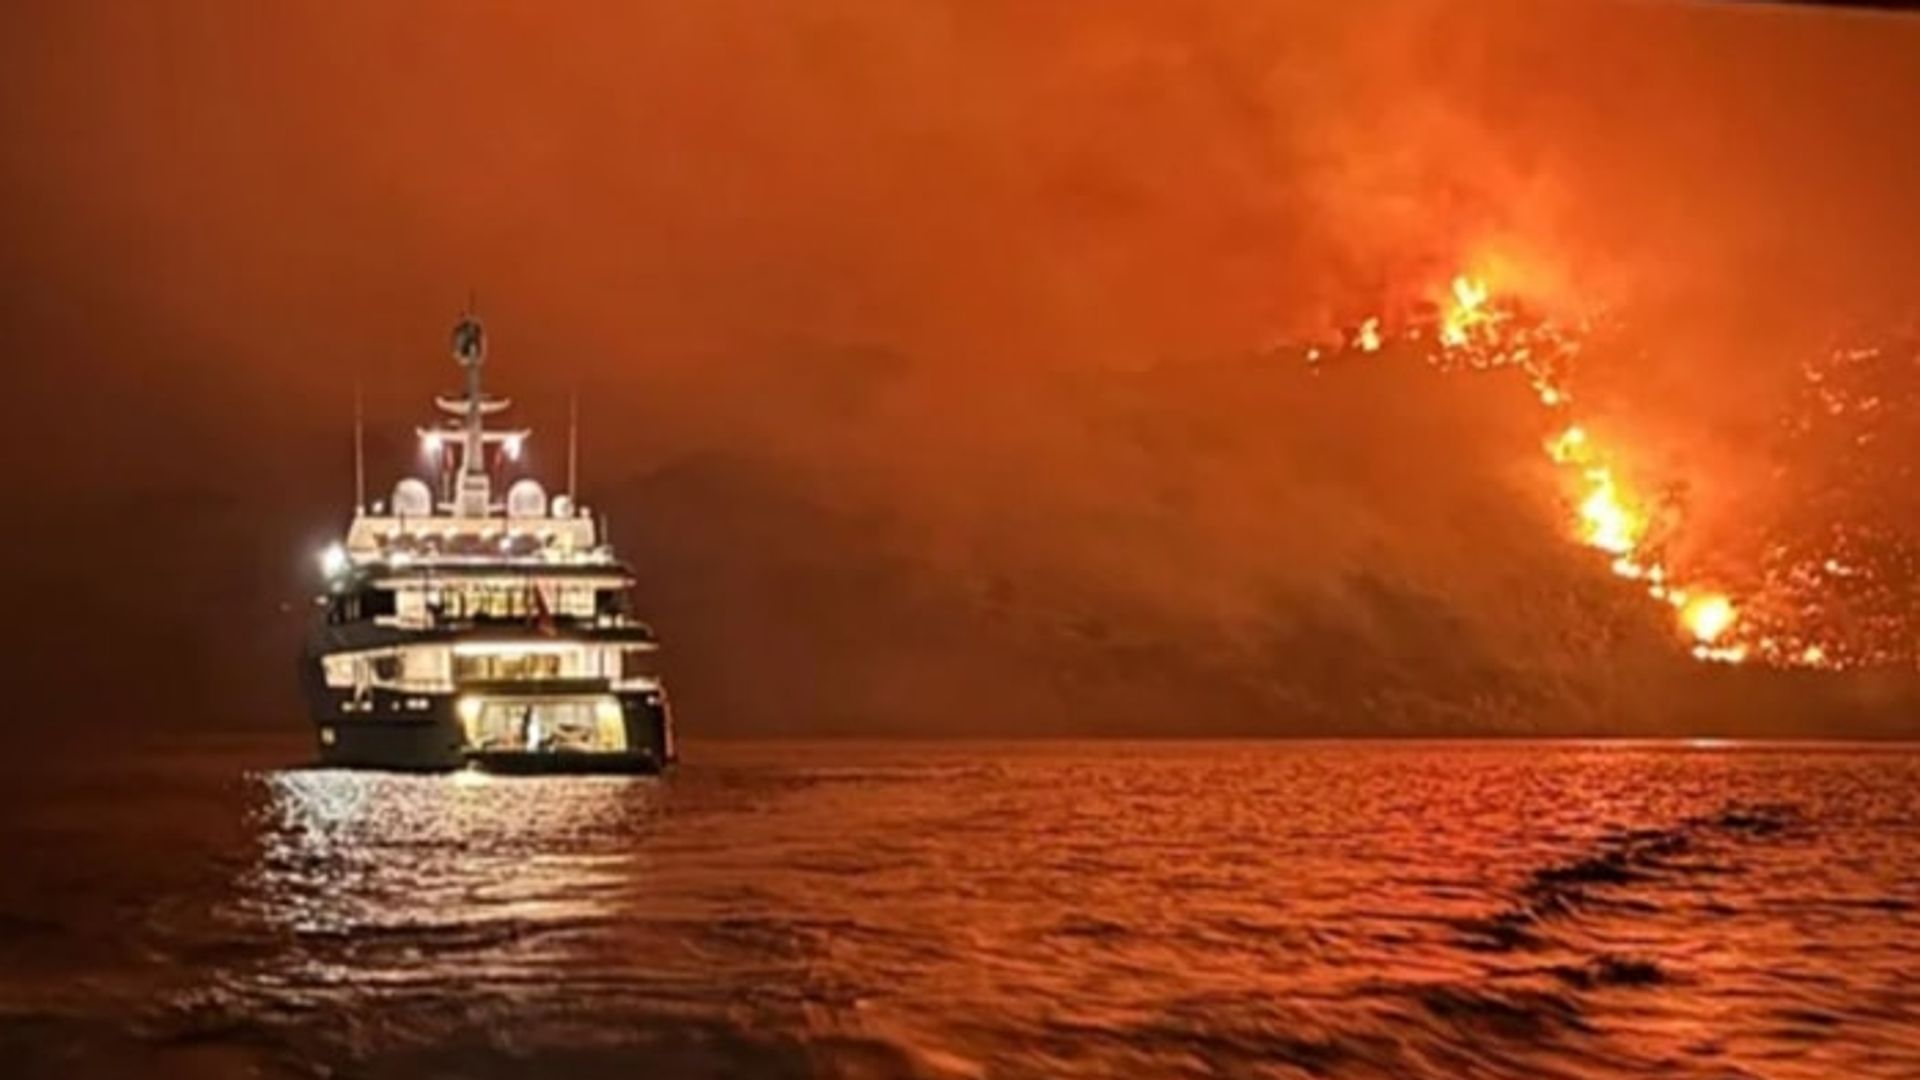 Outrage after 'yacht fireworks' spark forest blaze